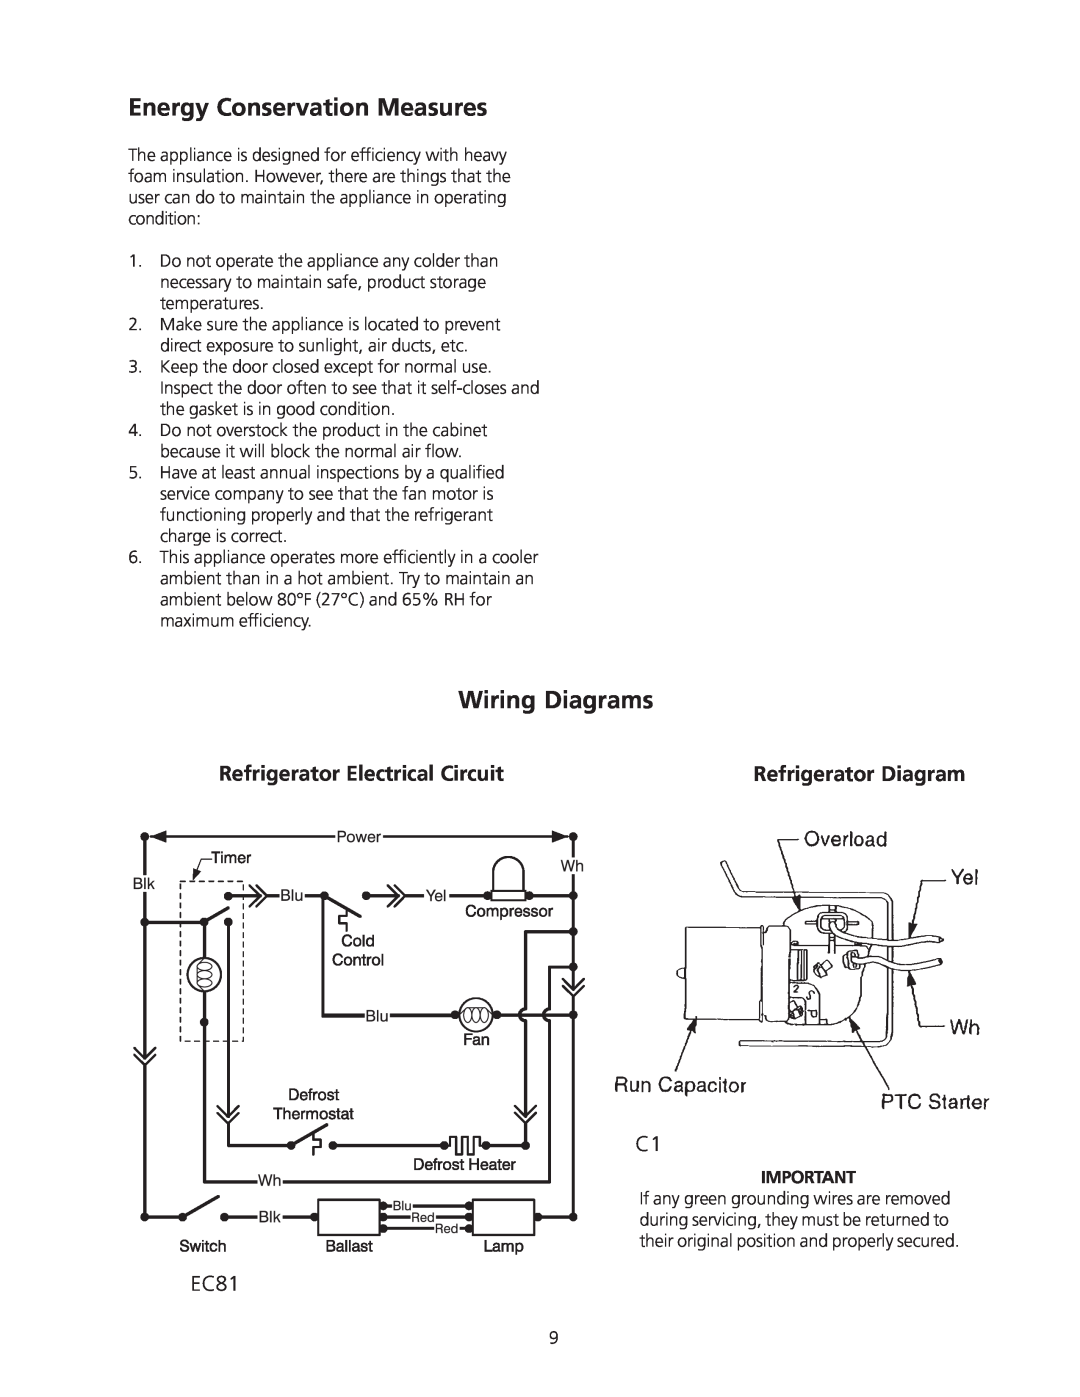 Frigidaire Artic Air Commerical Glass Door Refrigerator Energy Conservation Measures, Wiring Diagrams, EC81 